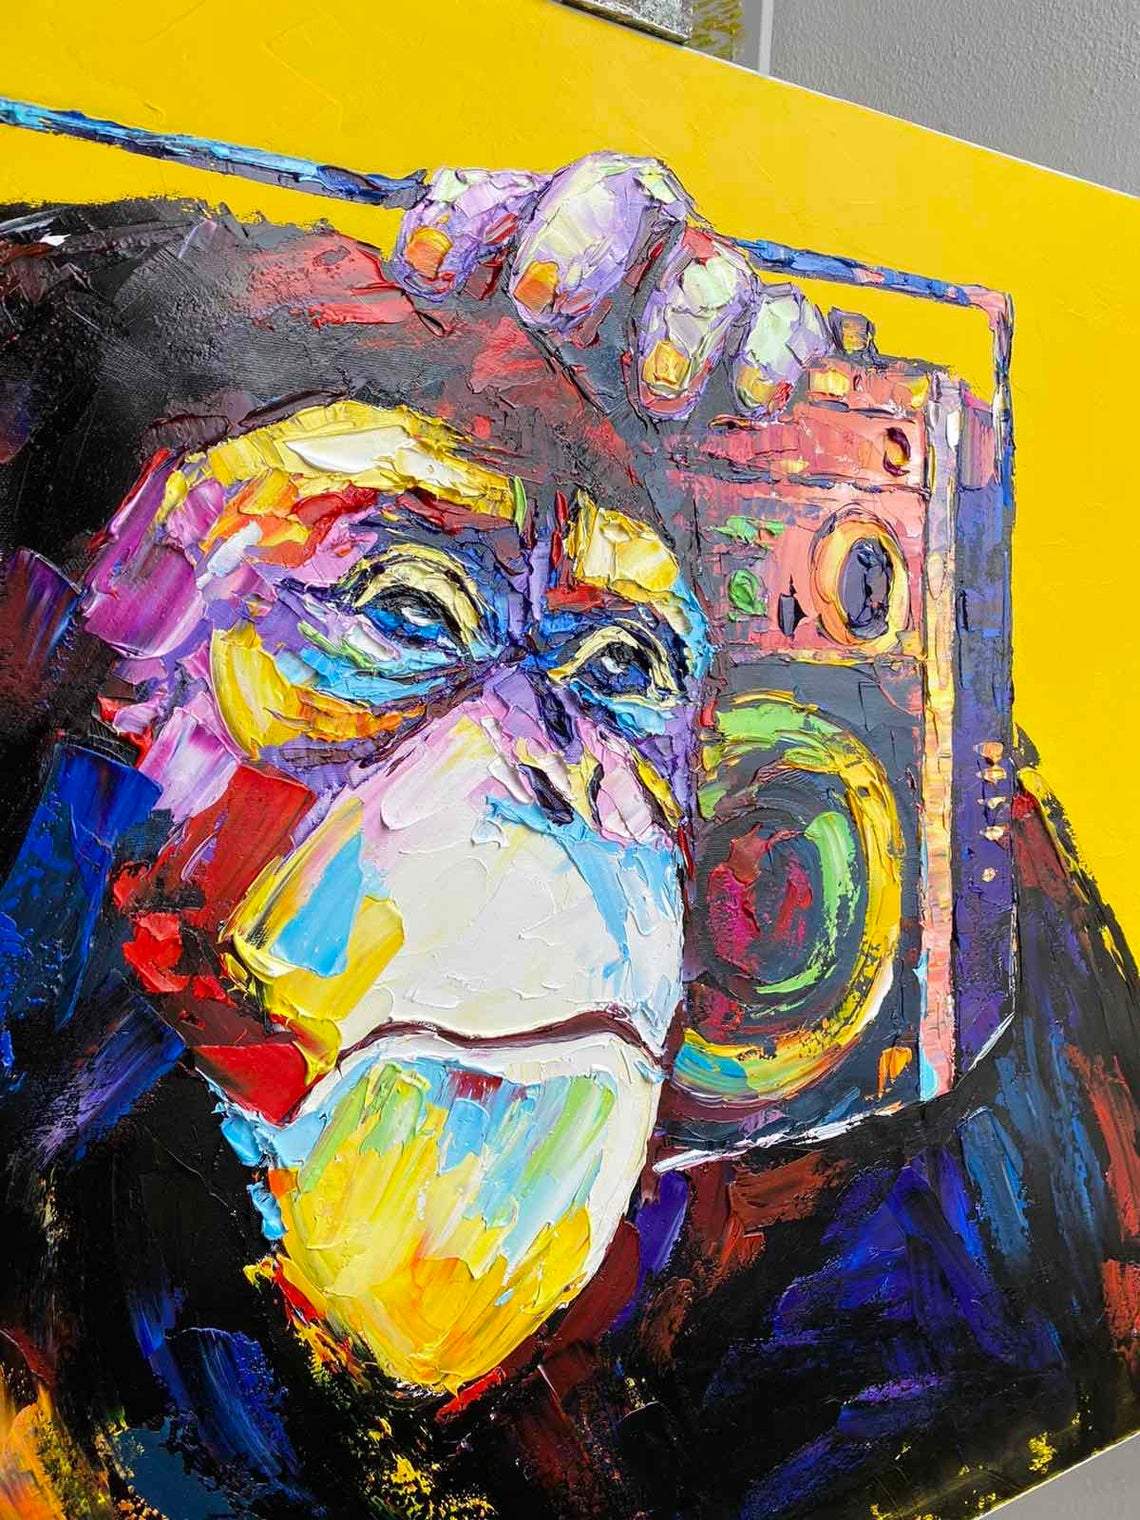 Cap - Monkey Puppet - Monkey Looking Away Meme Portrait Canvas Print. By  Artistshot